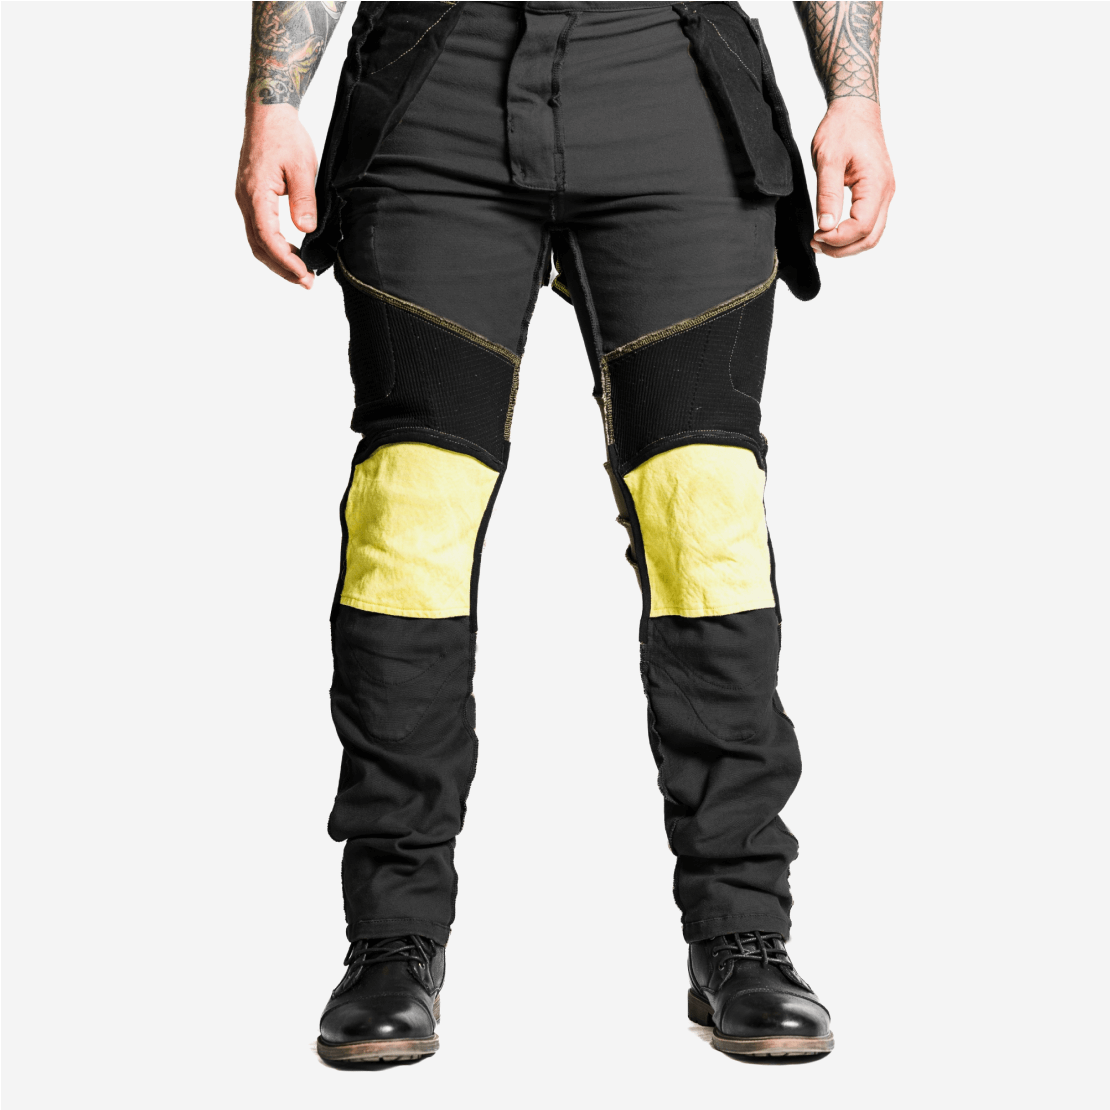 Men's Motorcycle Riding Denim Jeans Motorbike Pants With Knee &Hip Armor  Pads | eBay